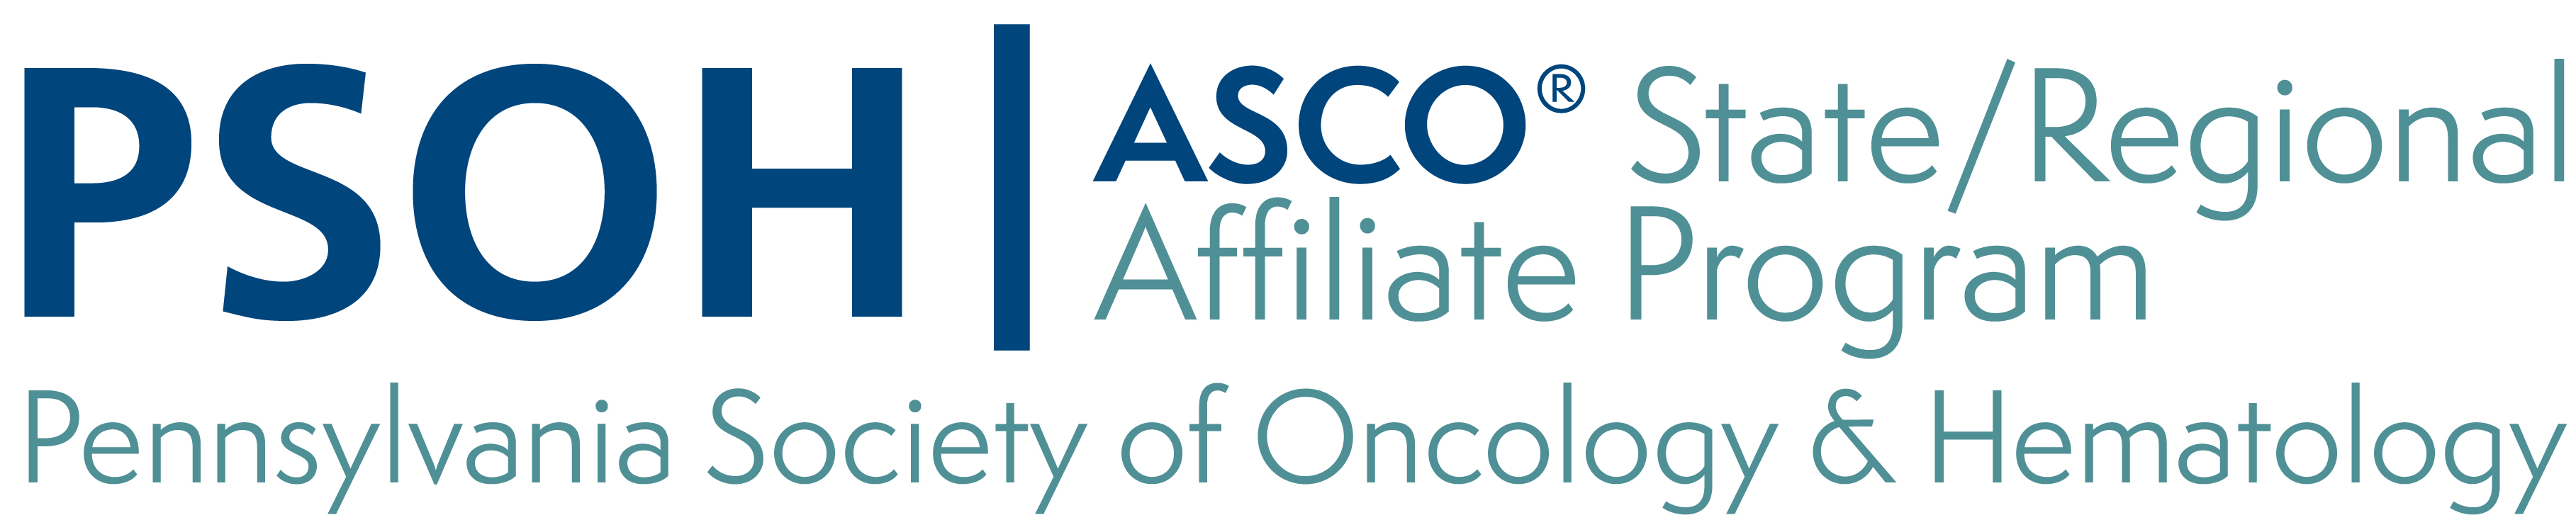 Pennsylvania Society of Oncology & Hematology